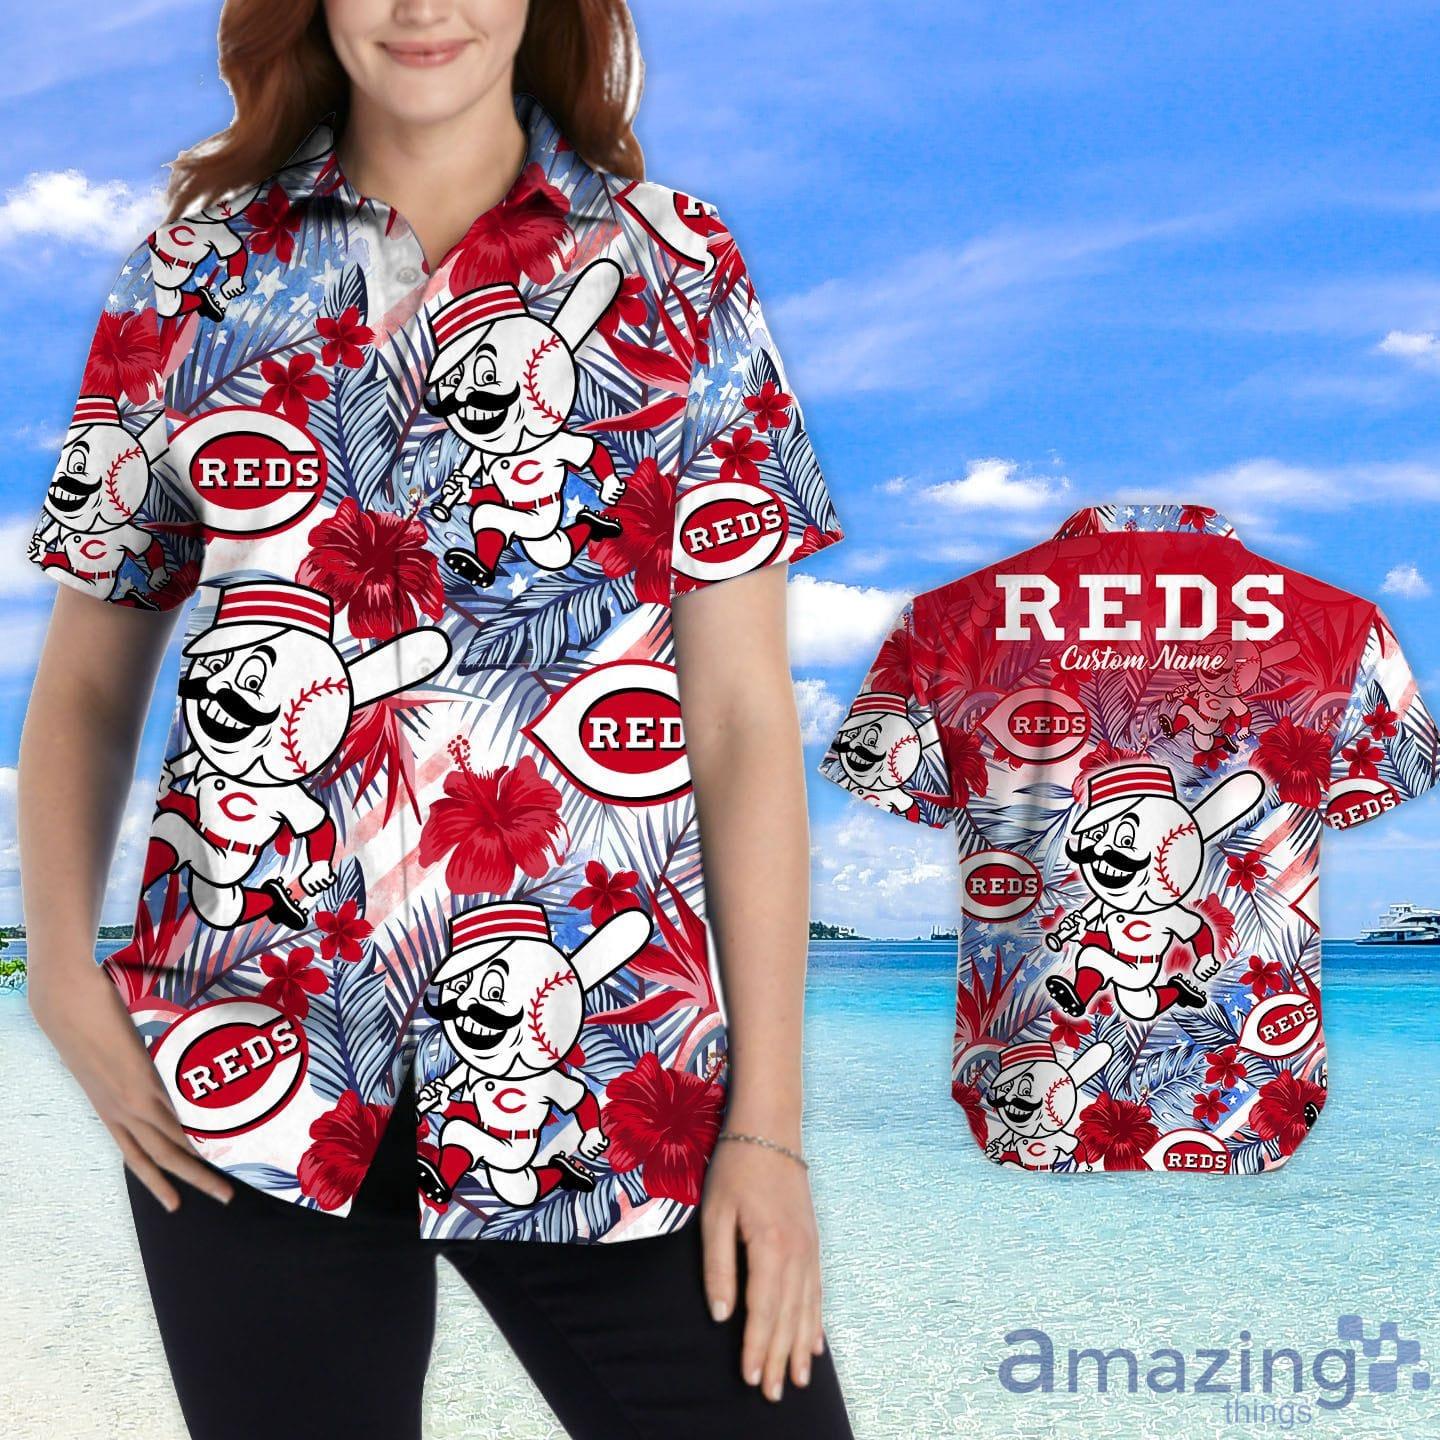 Cincinnati Reds 12'' x 16'' Personalized Team Jersey Print